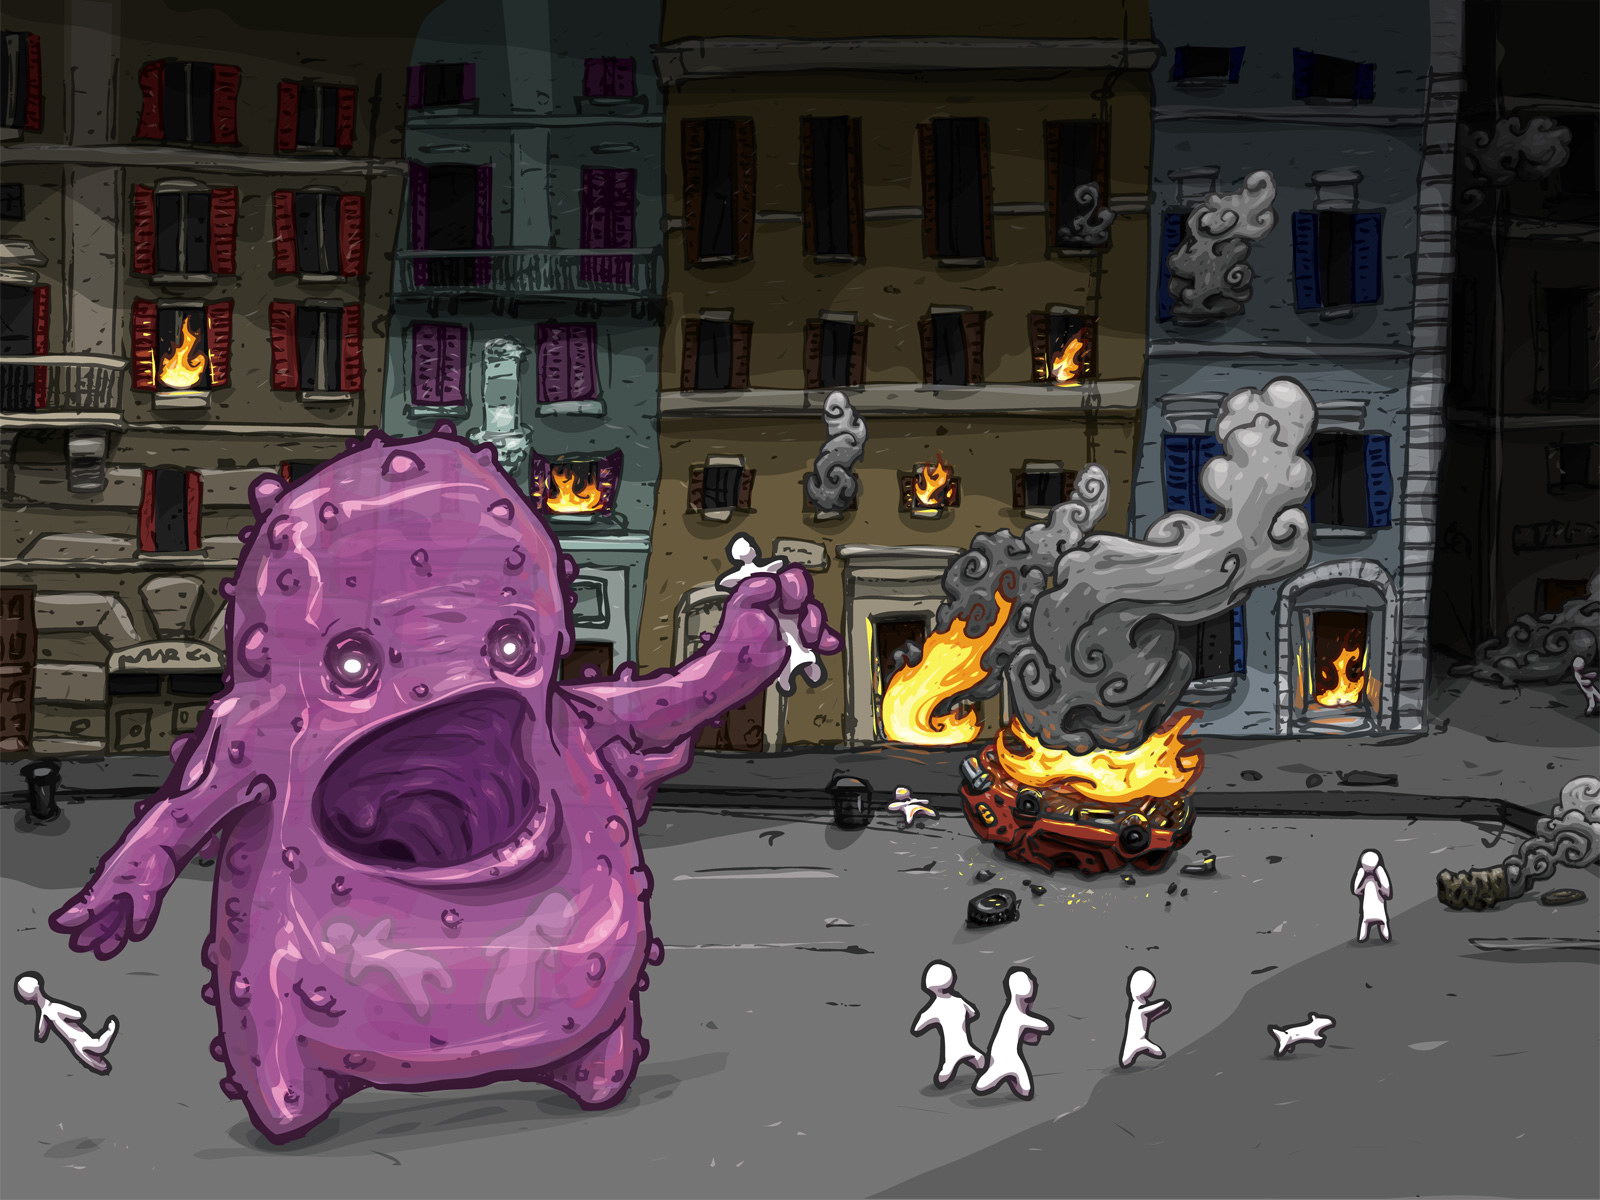 General 1600x1200 comics artwork Blob (character) fire burning street creature